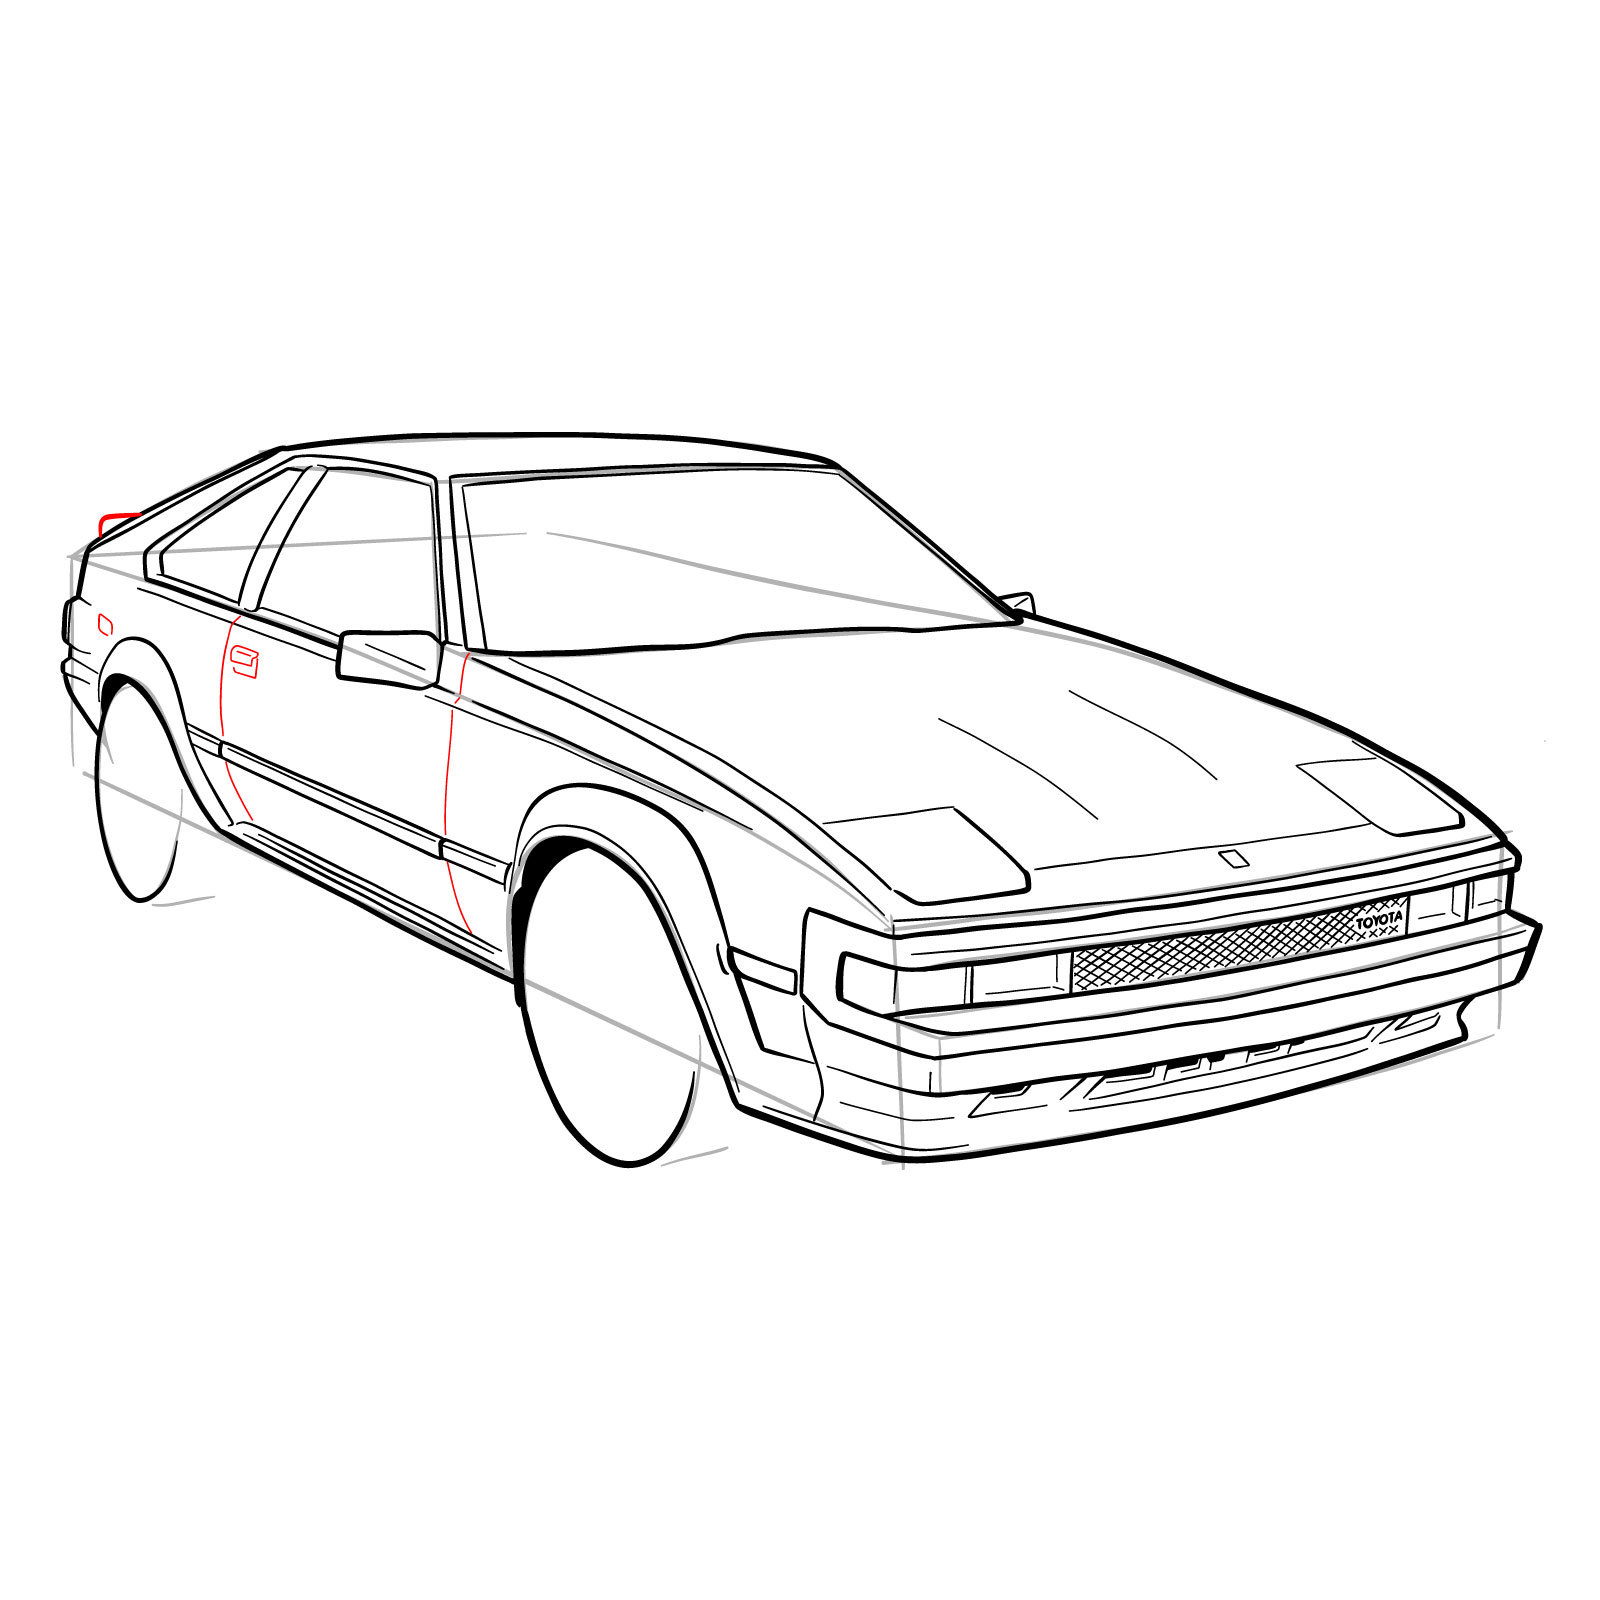 How to draw a 1985 Toyota Celica Supra P Type MK 2 - step 33